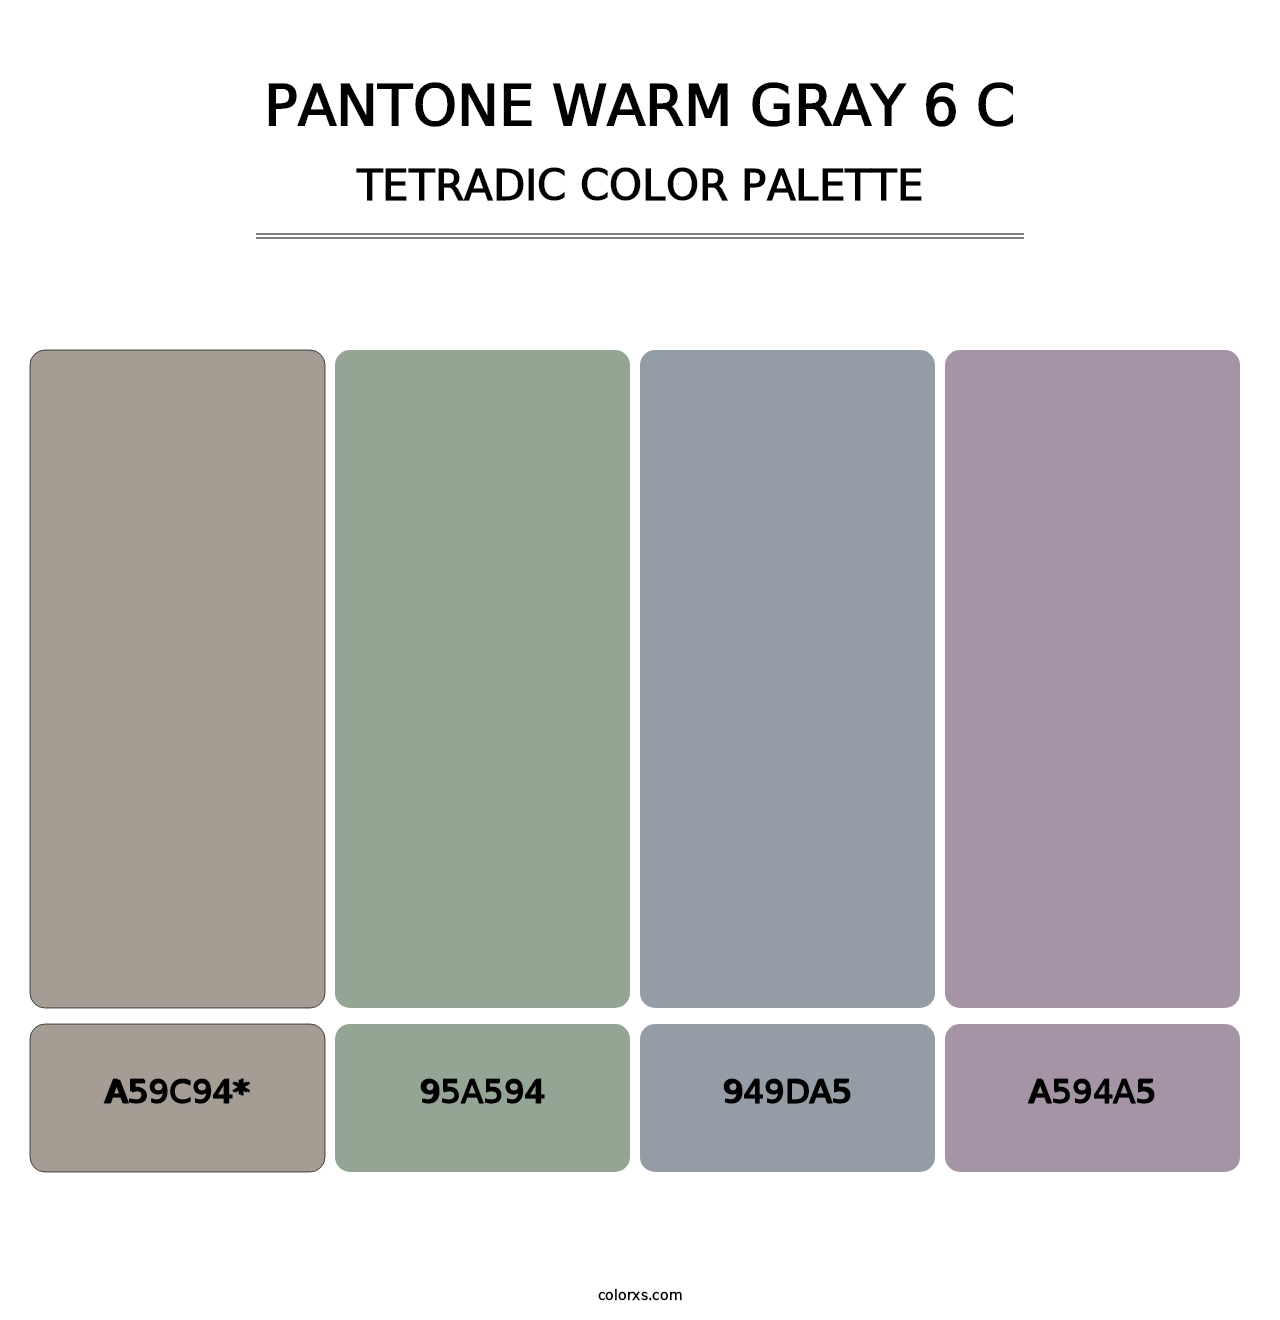 PANTONE Warm Gray 6 C - Tetradic Color Palette